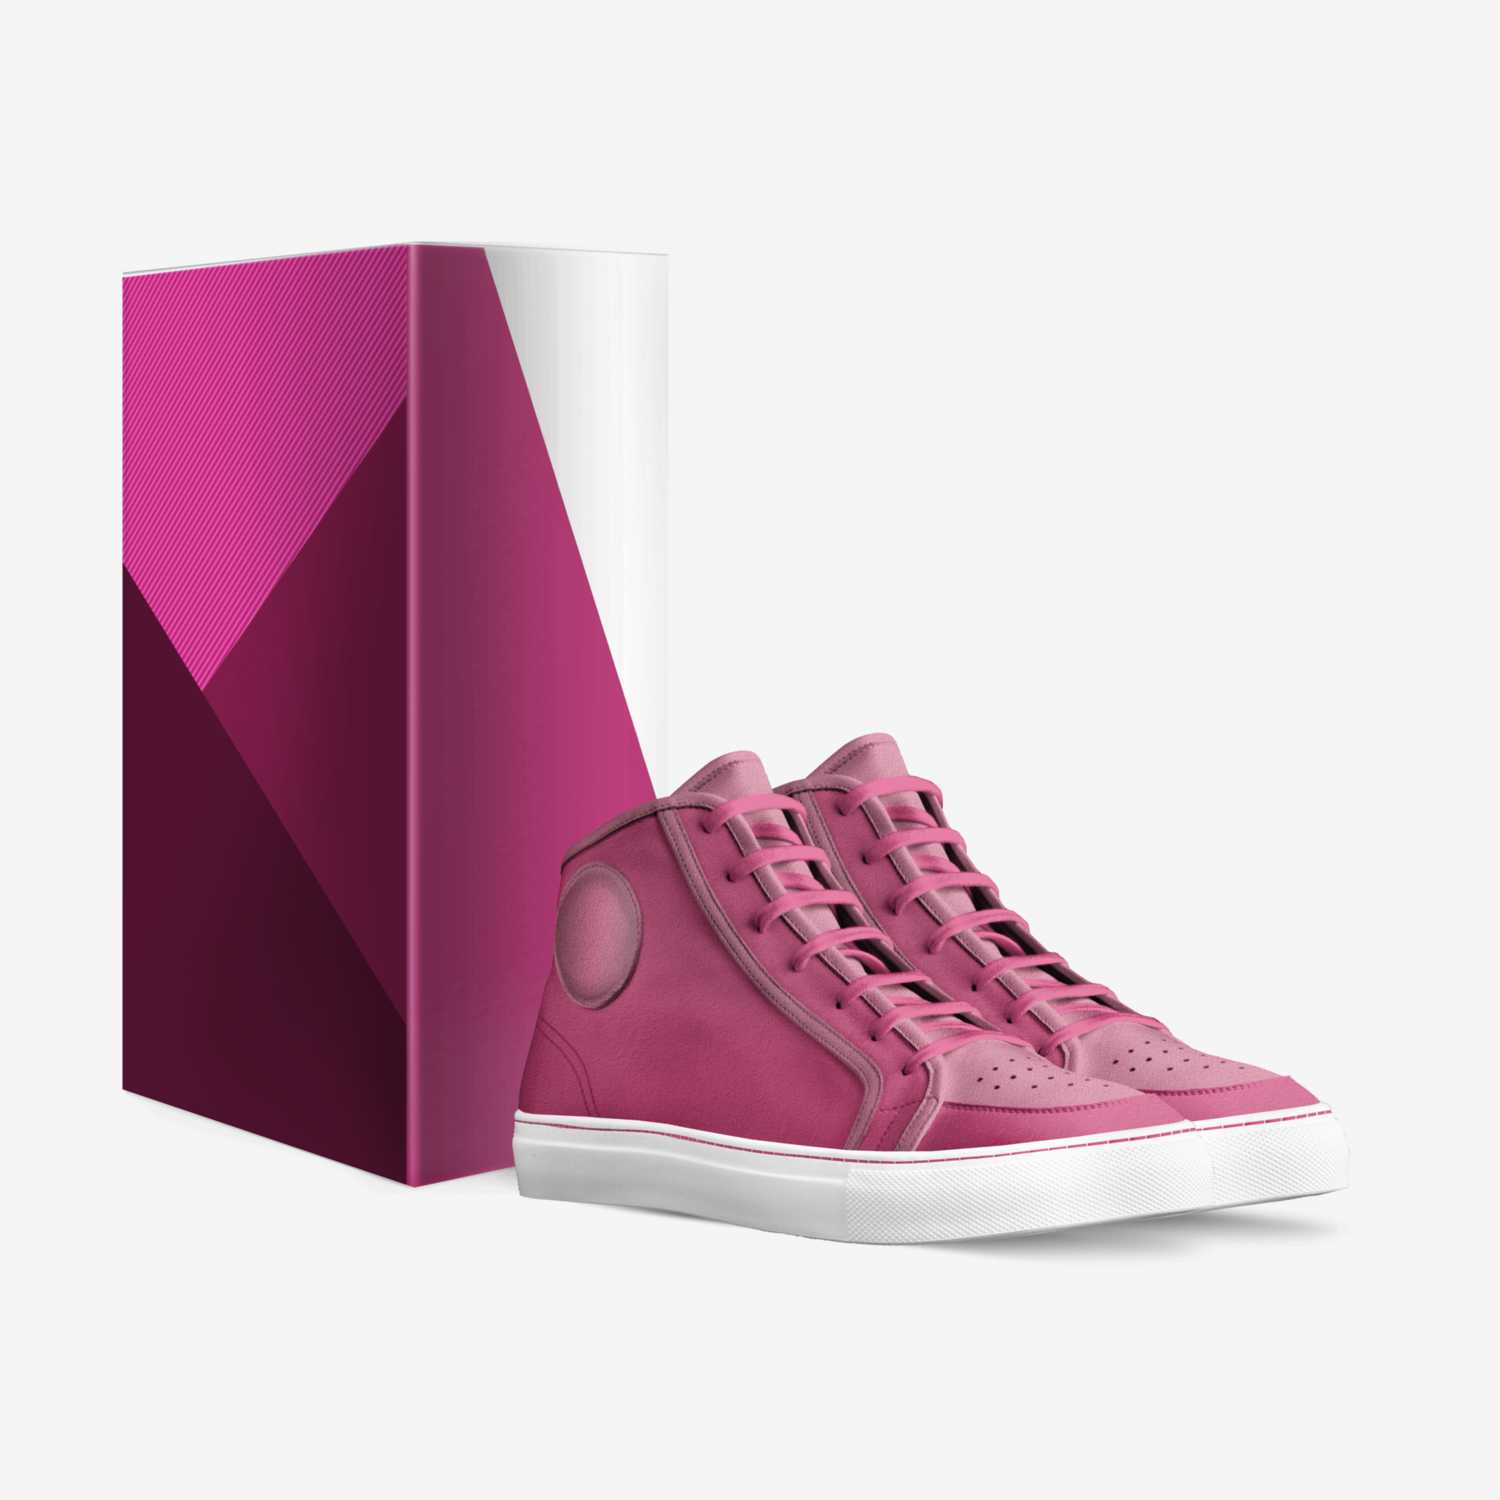 pinkwarrior custom made in Italy shoes by Dana Kearney | Box view